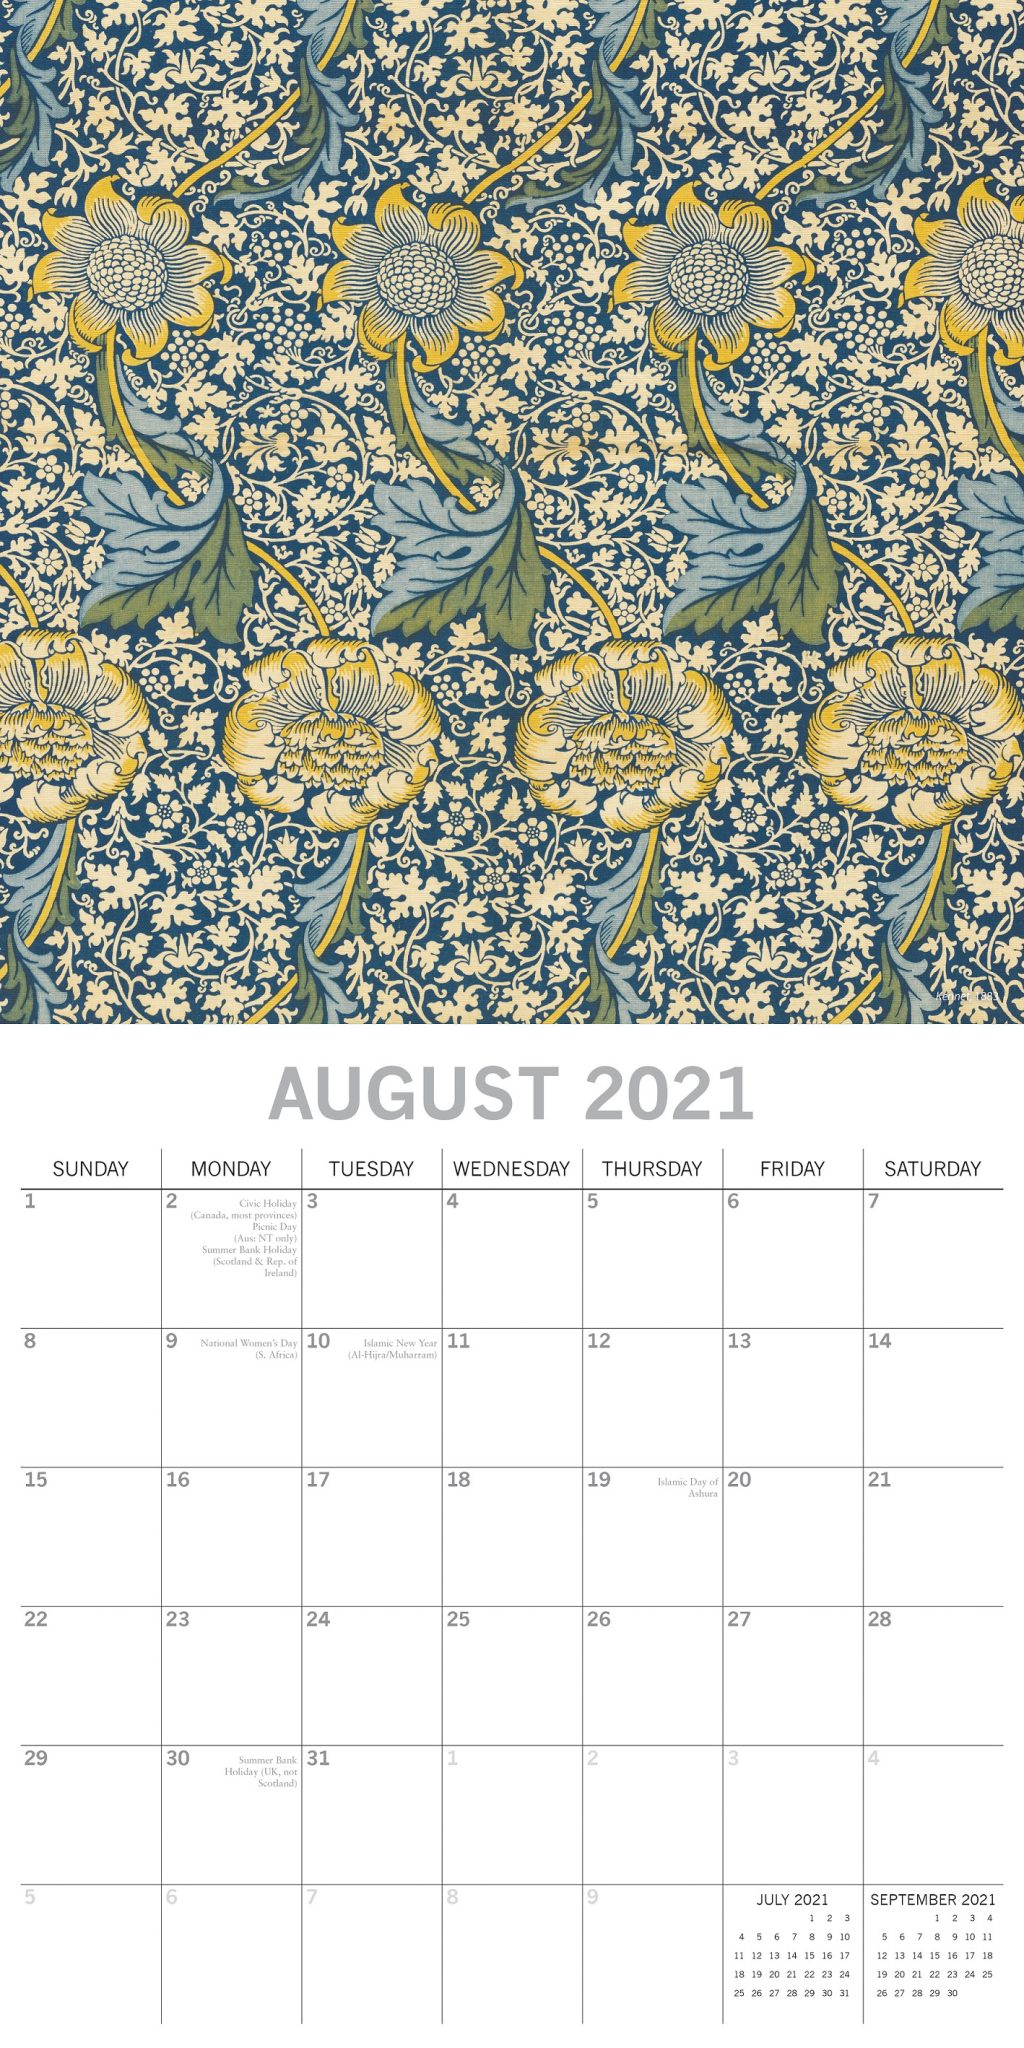 2021 William Morris Calendar | Save the Children Shop